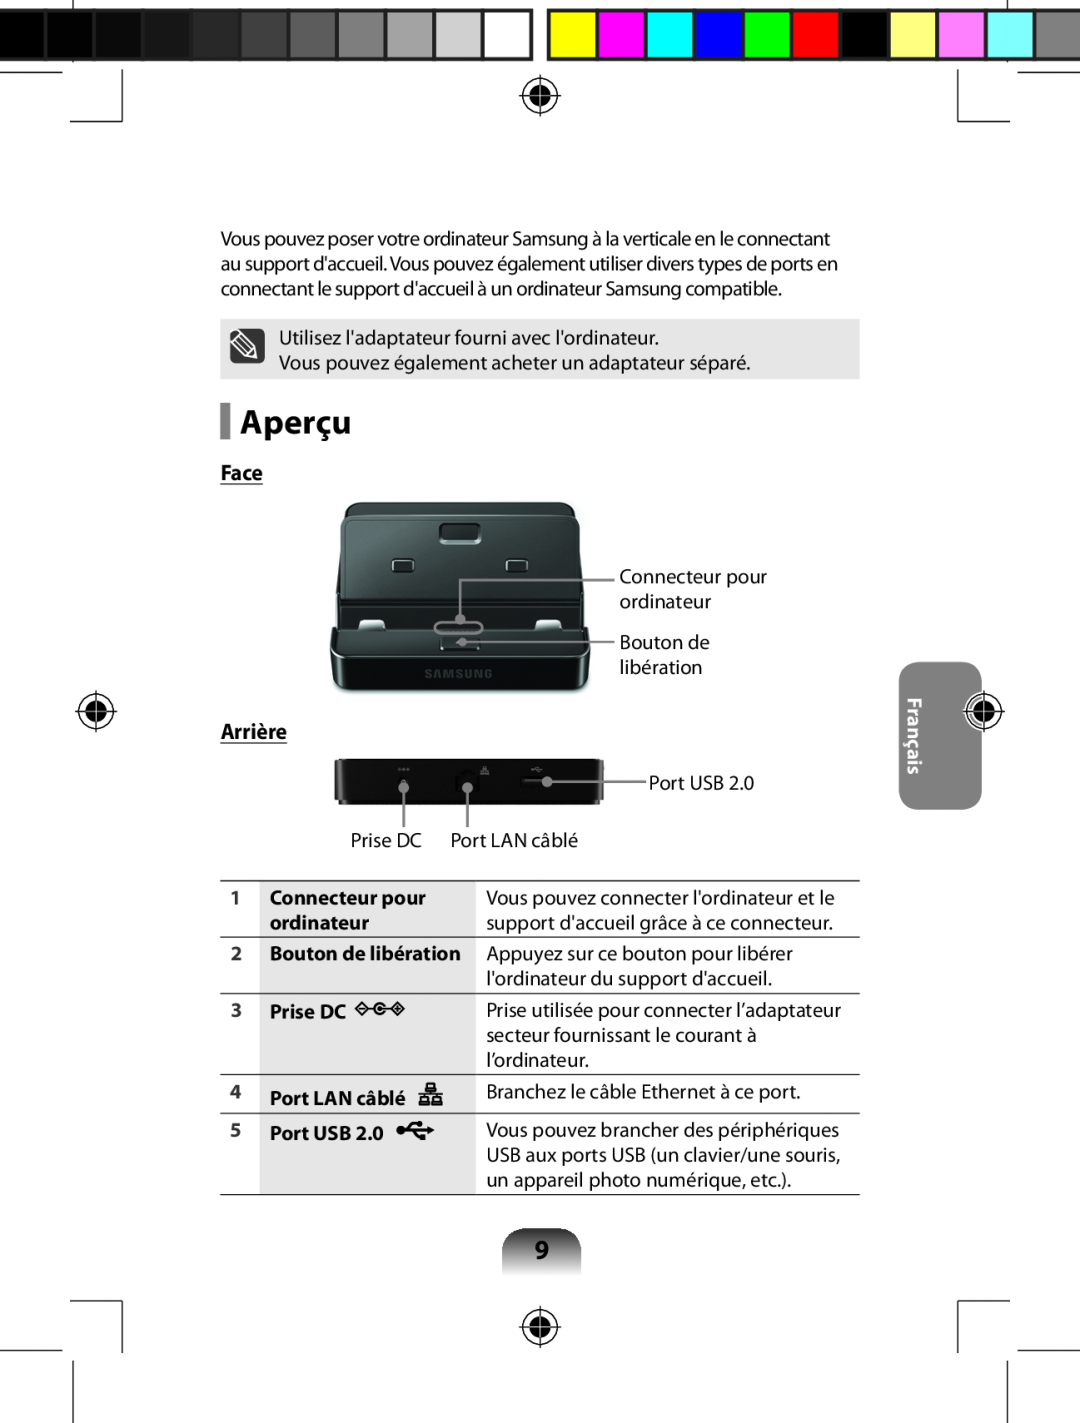 Samsung AA-RD7NMKD/US, AARD7NSDOUS manual Aperçu, Face, Arrière, Français 